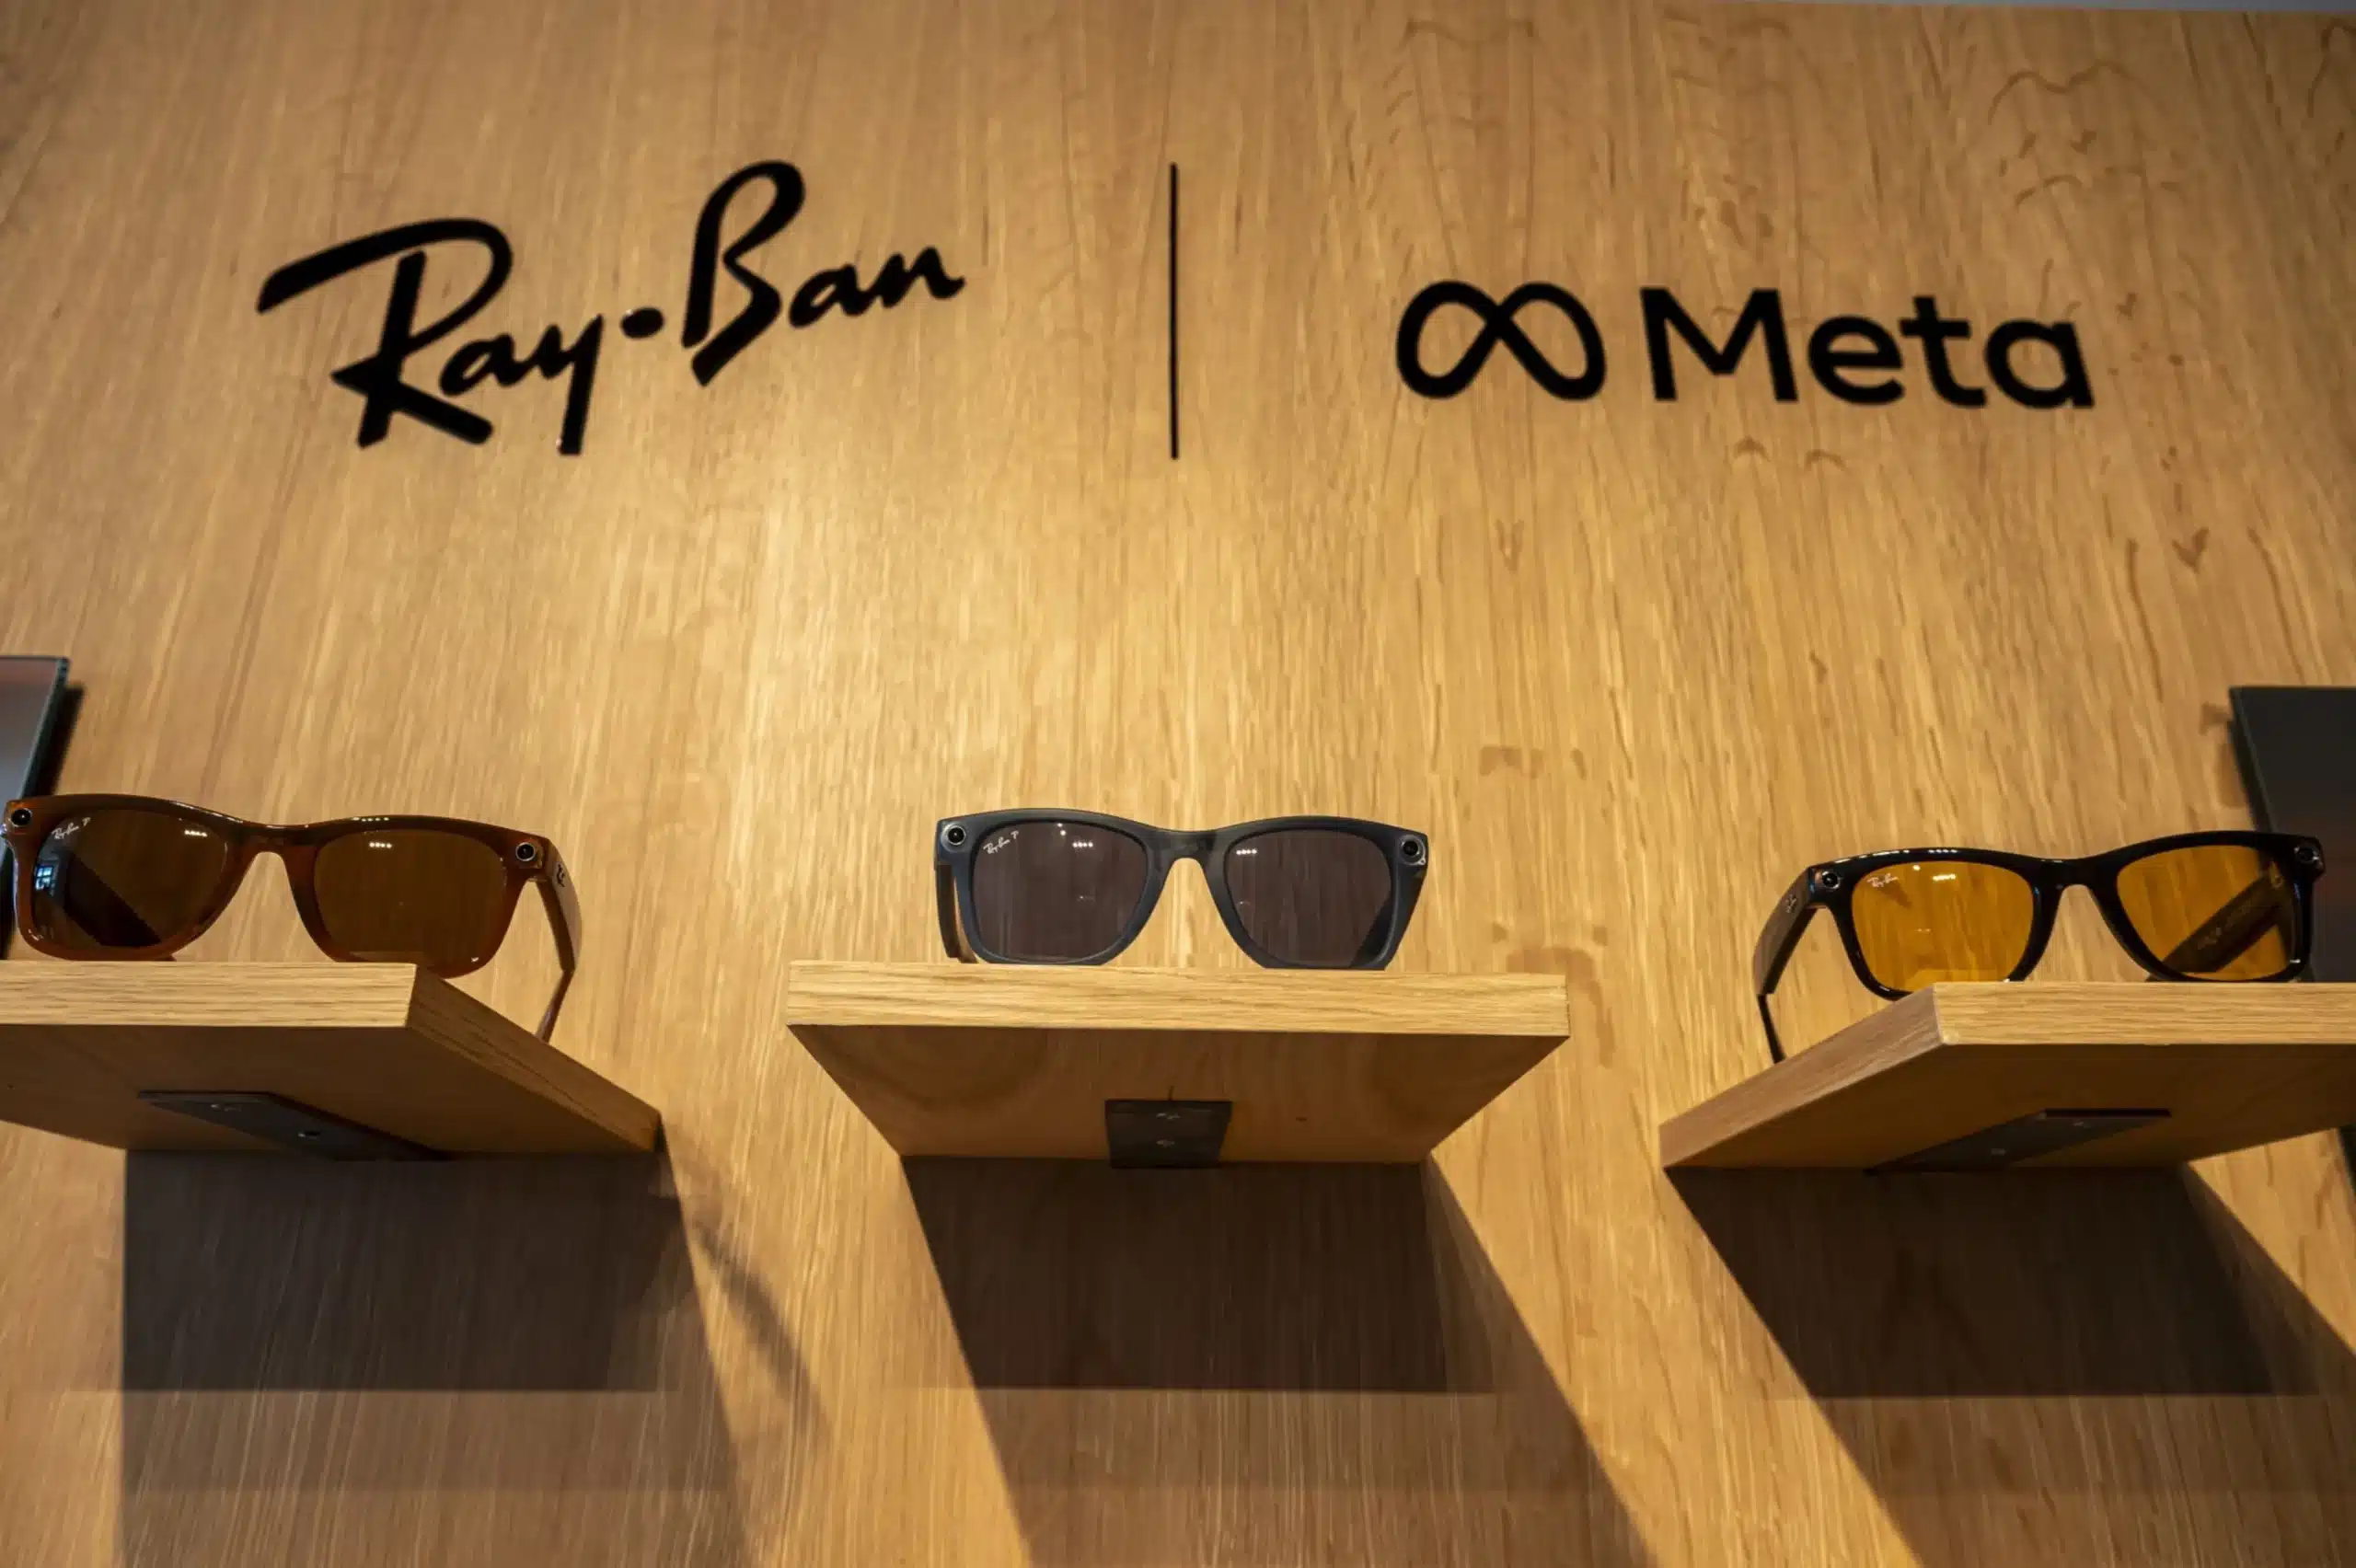 Presentation of Ray Ban Meta glasses